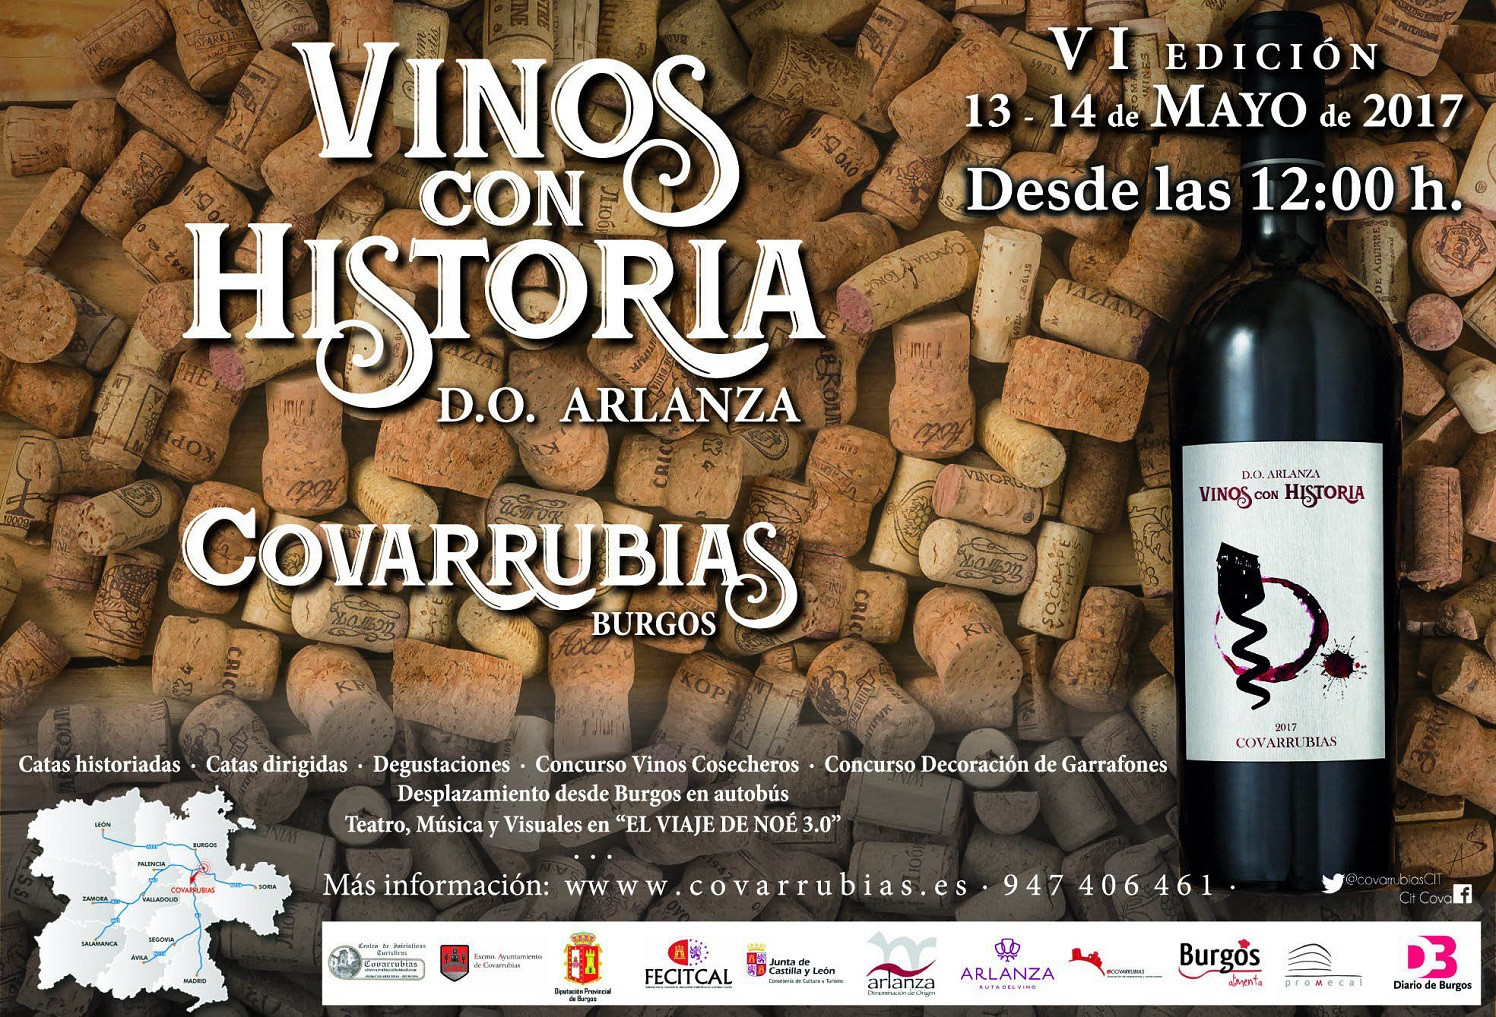 CovarrubiasFoto1NP Burgos VinosconHistoria 10052017